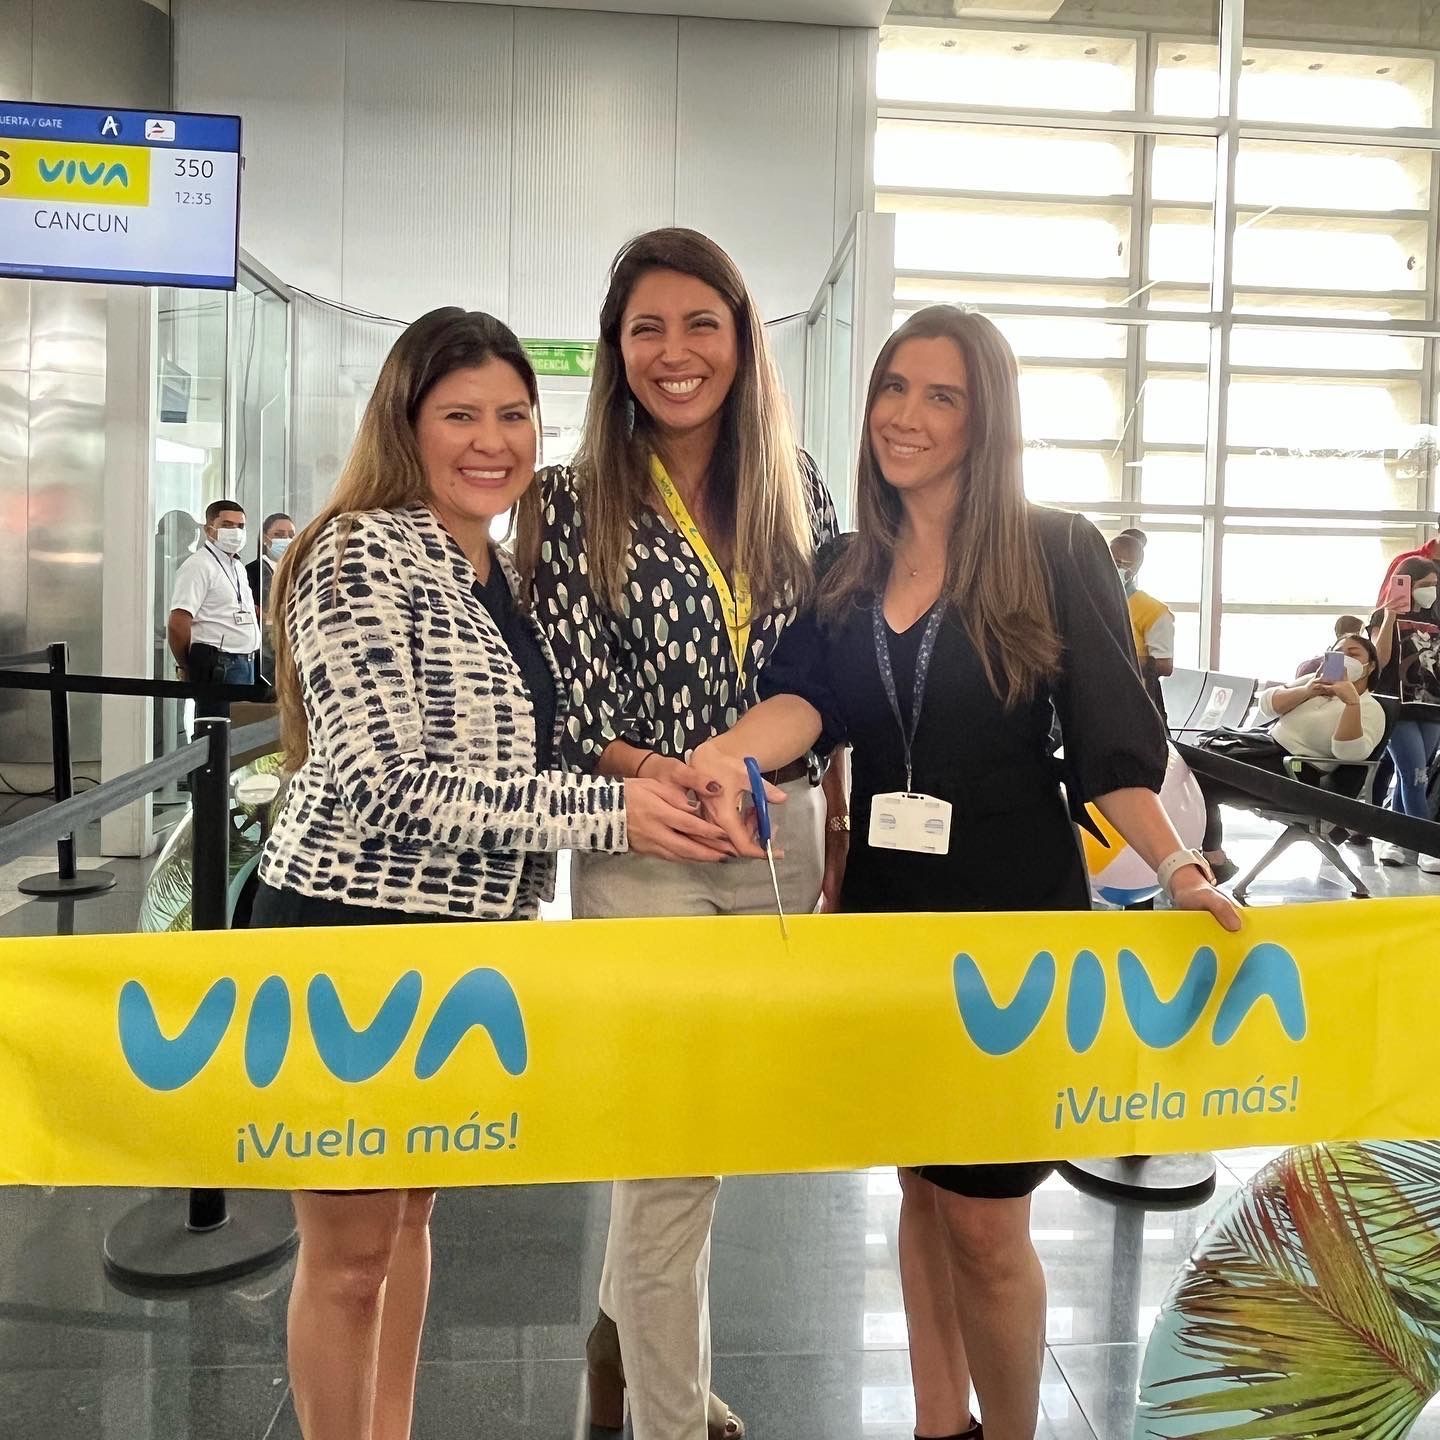 Viva Cali to Cancun